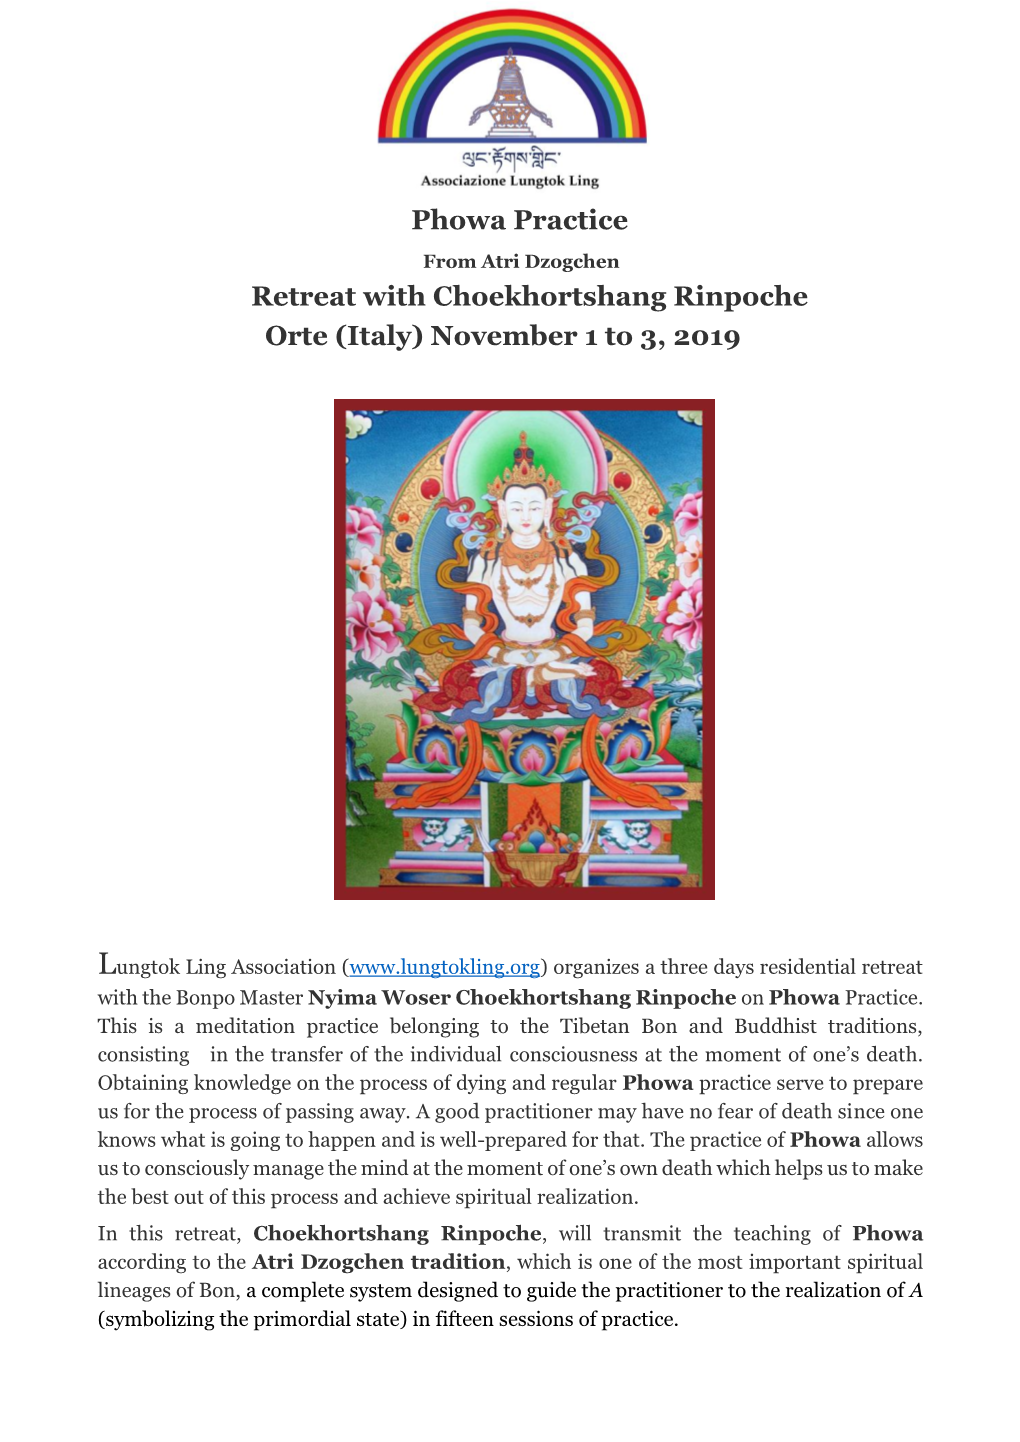 Phowa Practice from Atri Dzogchen Retreat with Choekhortshang Rinpoche Orte (Italy) November 1 to 3, 2019